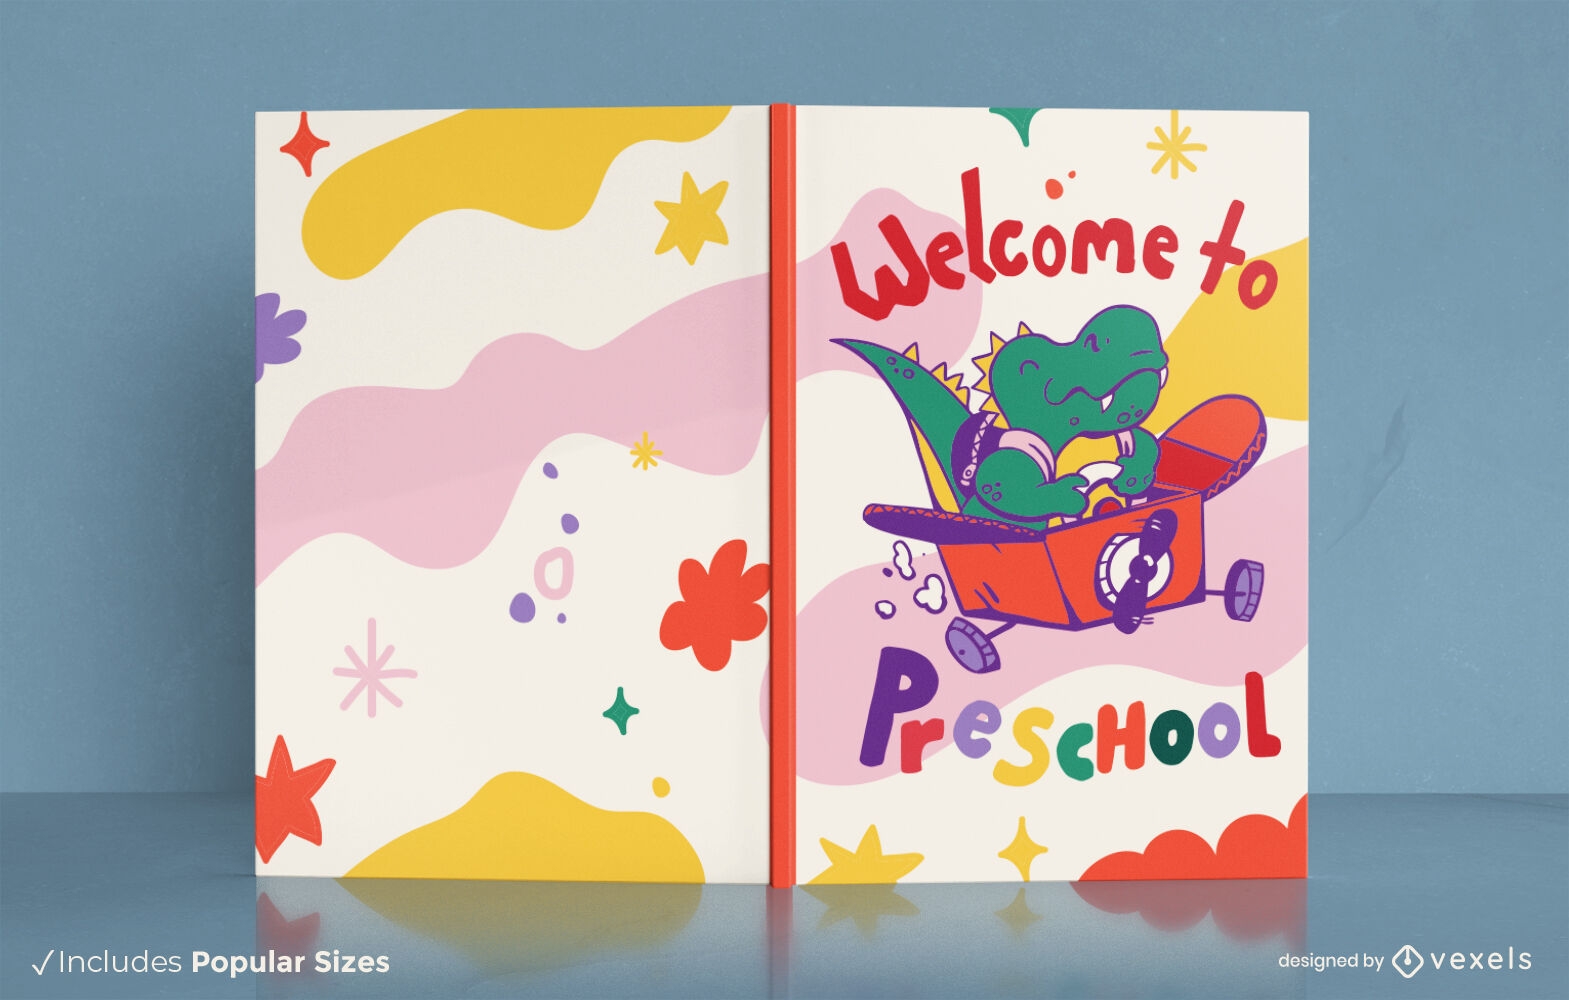 Welcome to preschool book cover design